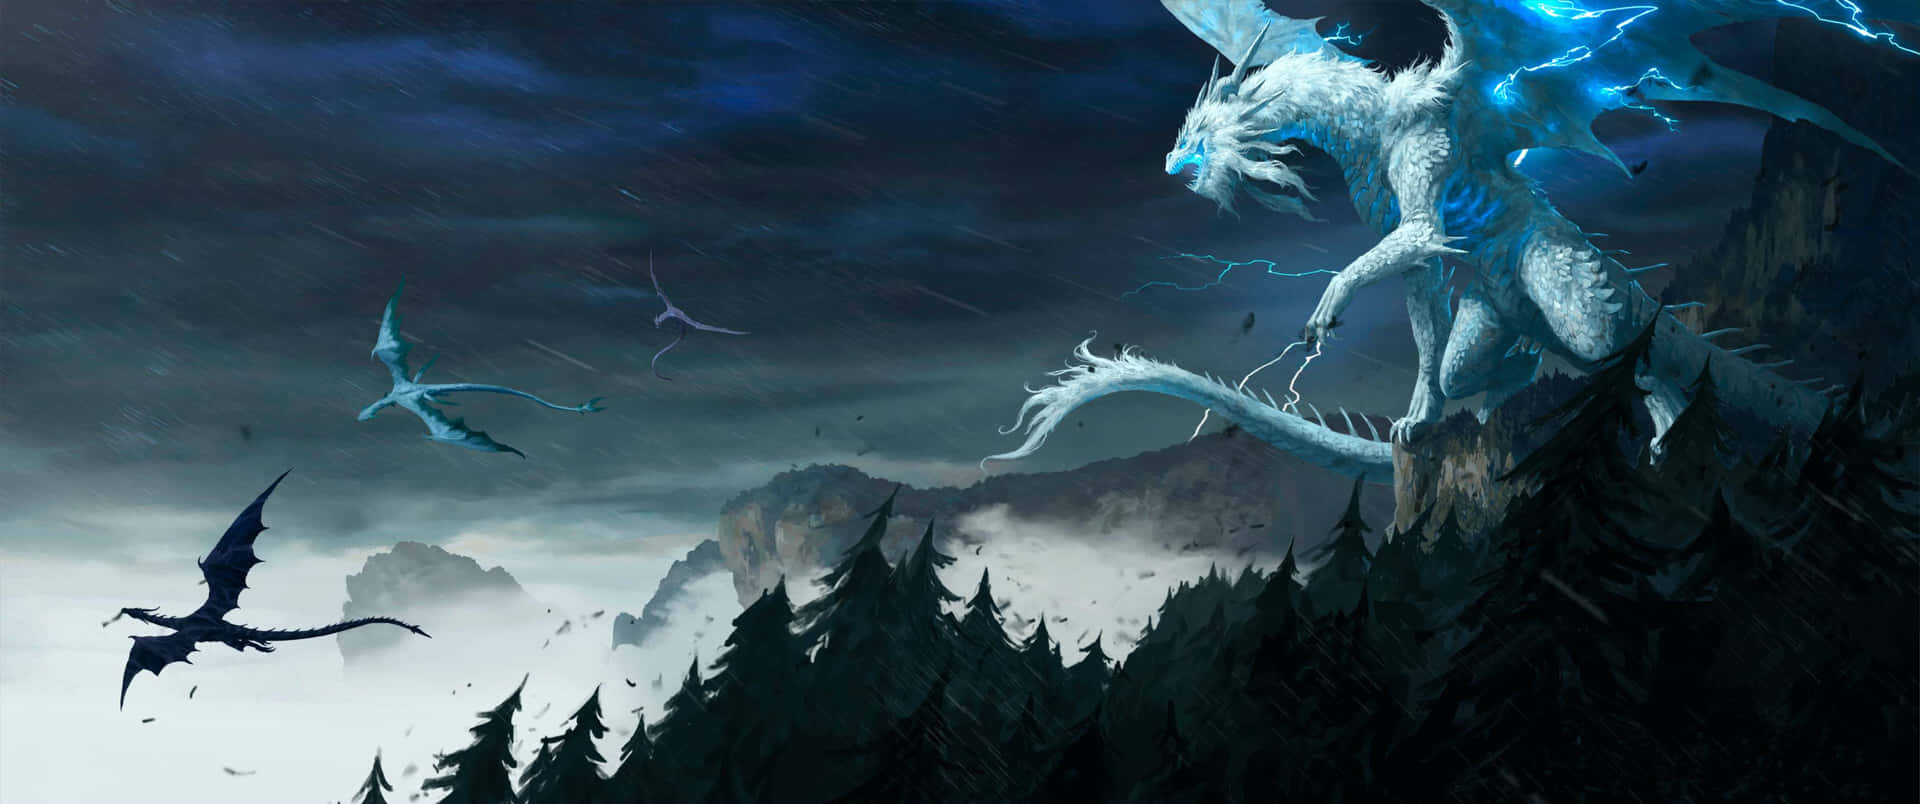 3440x1440 Dragon Flying Over Mountain Wallpaper